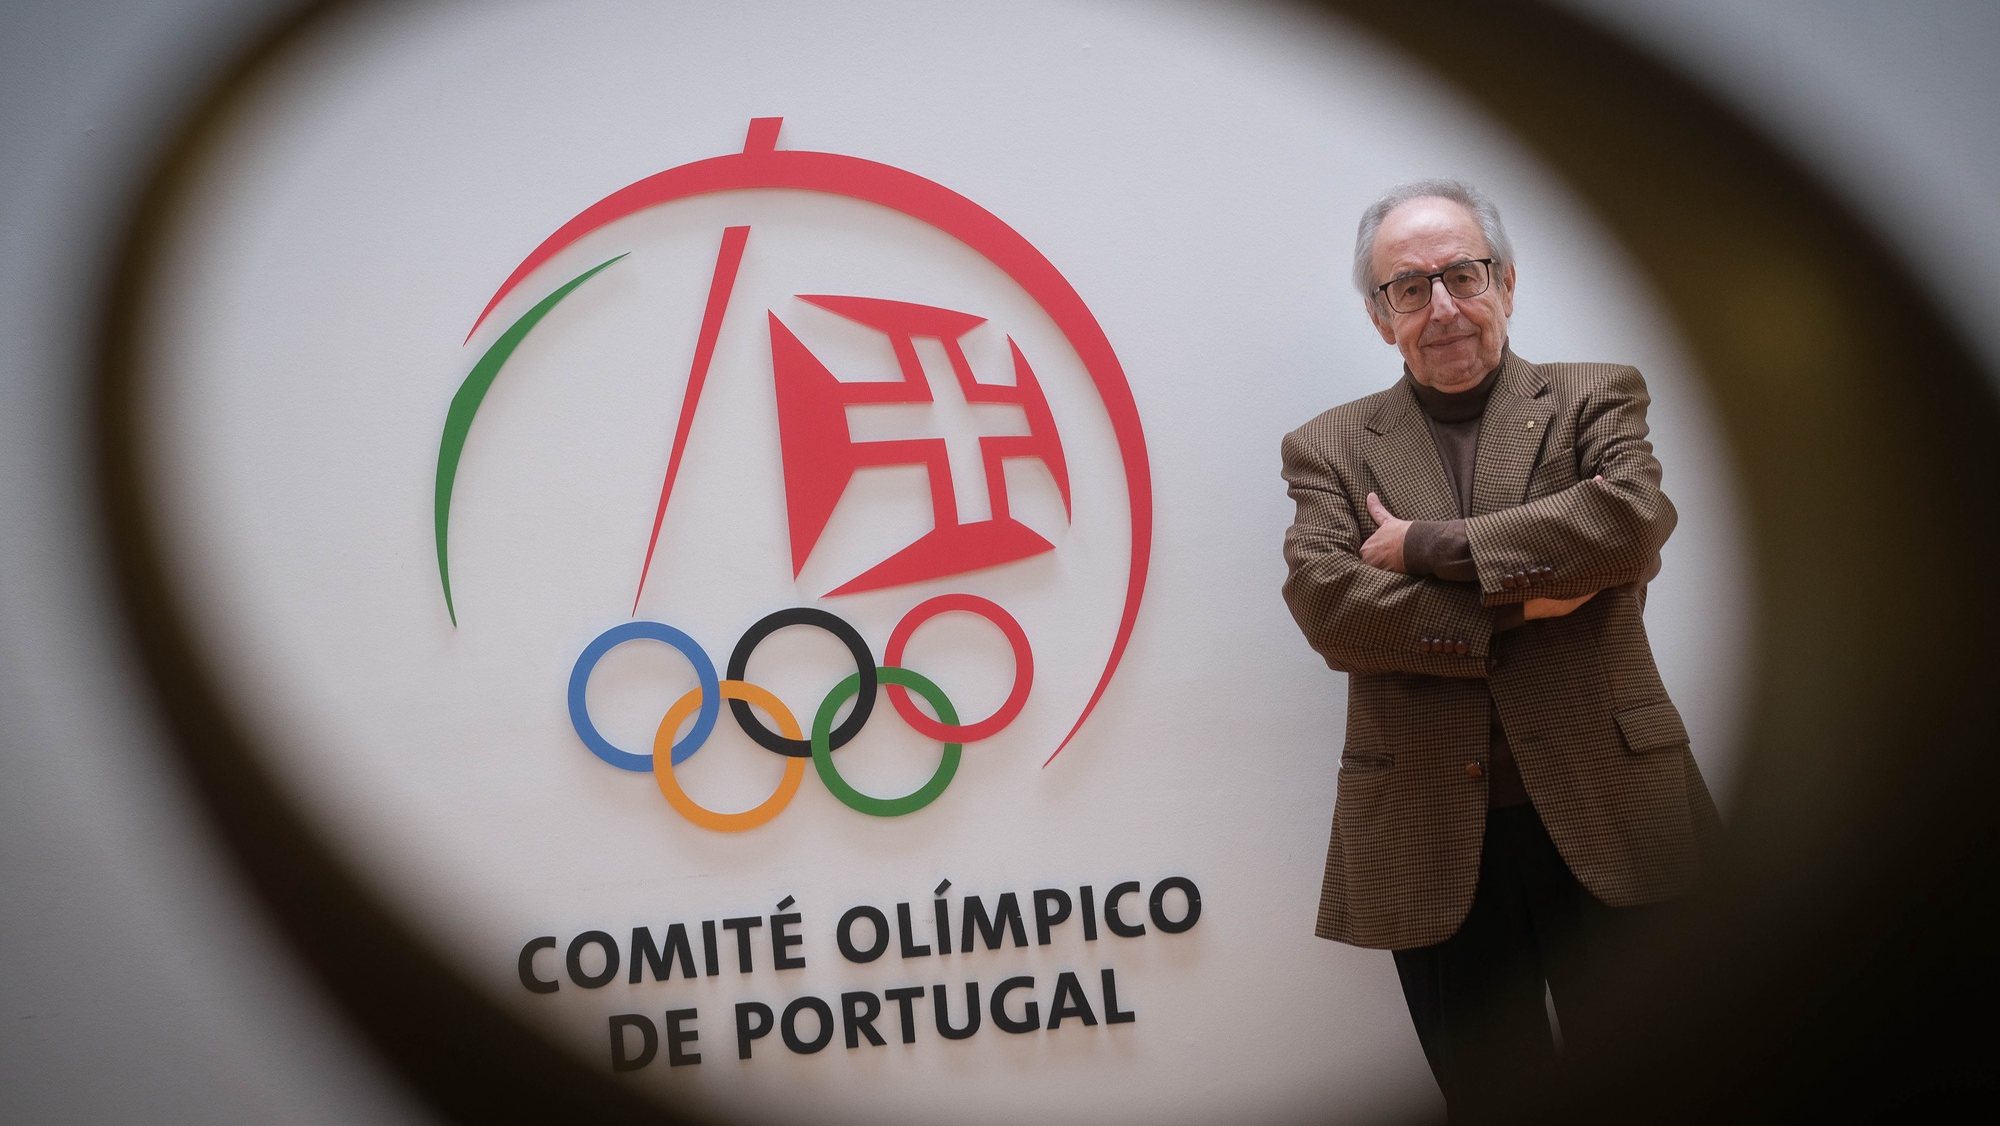 O presidente do Comité Olímpico de Portugal (COP), José Manuel Constantino